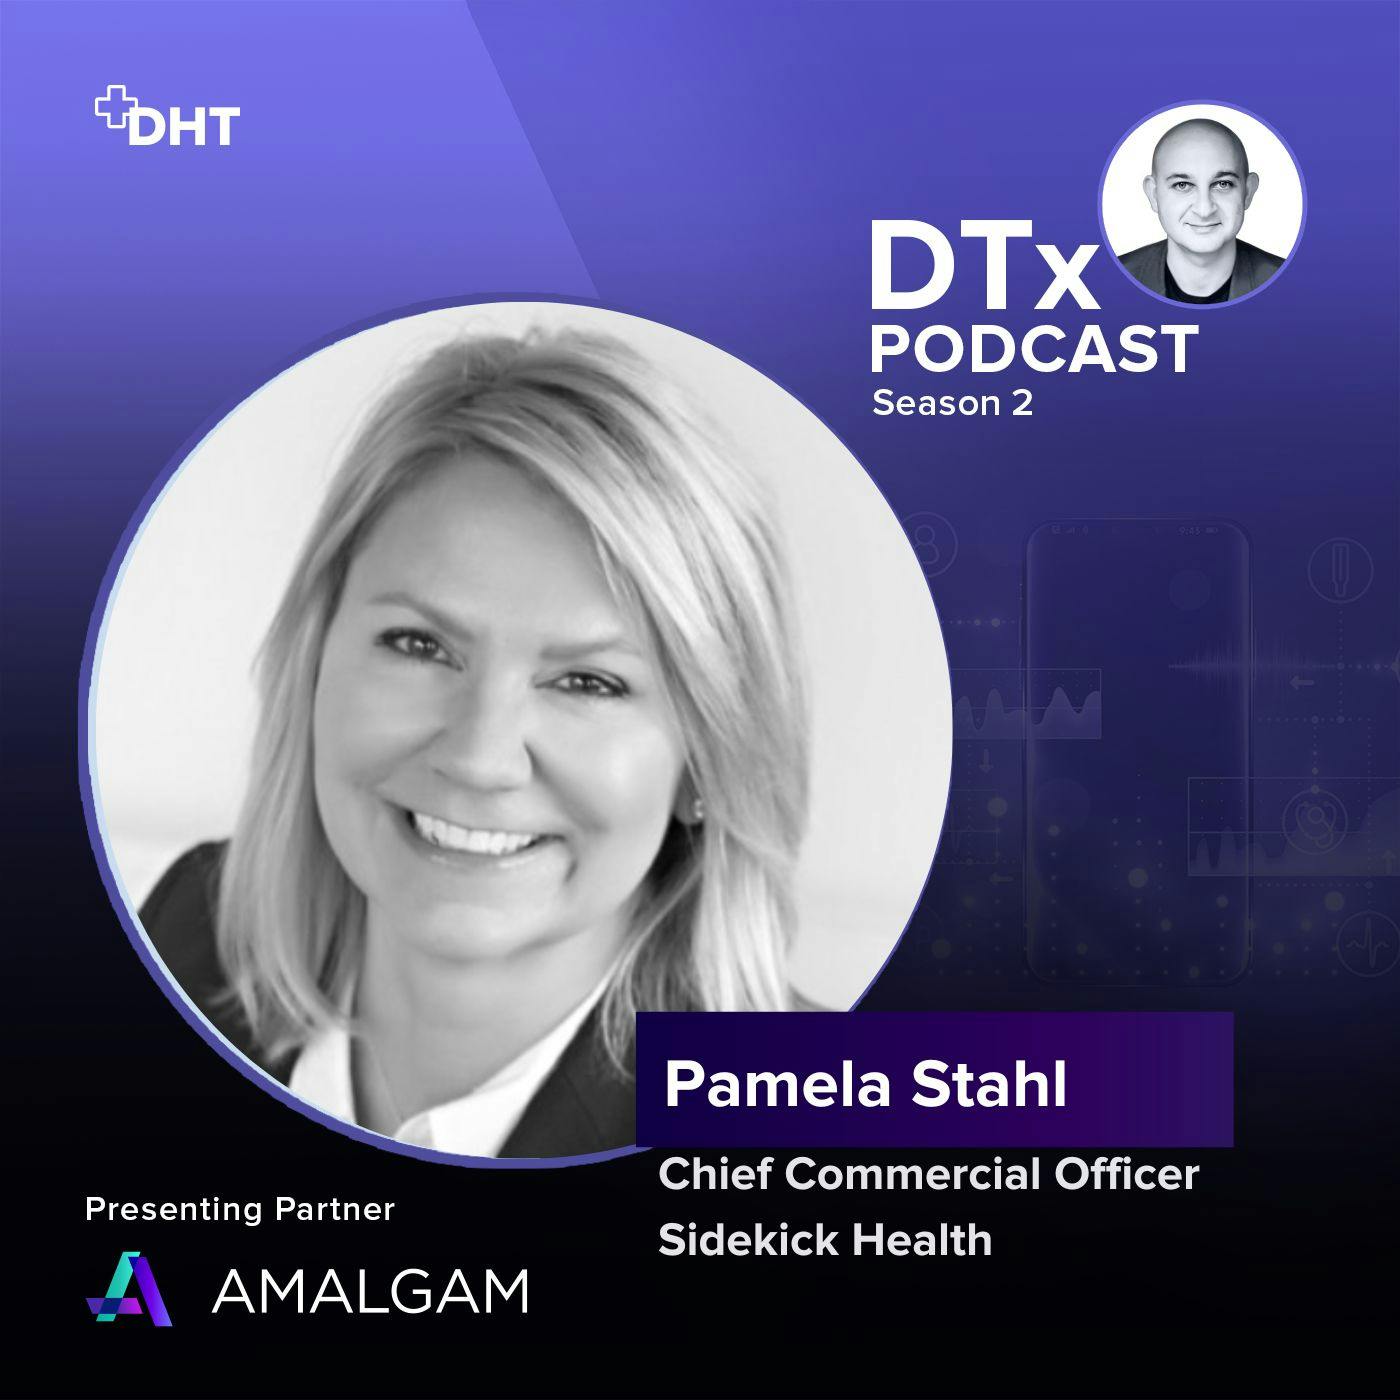 Gamifying Healthcare to Enable Behavior Change: Pamela Stahl Shares Insights into Sidekick Heath’s Digital Therapeutics